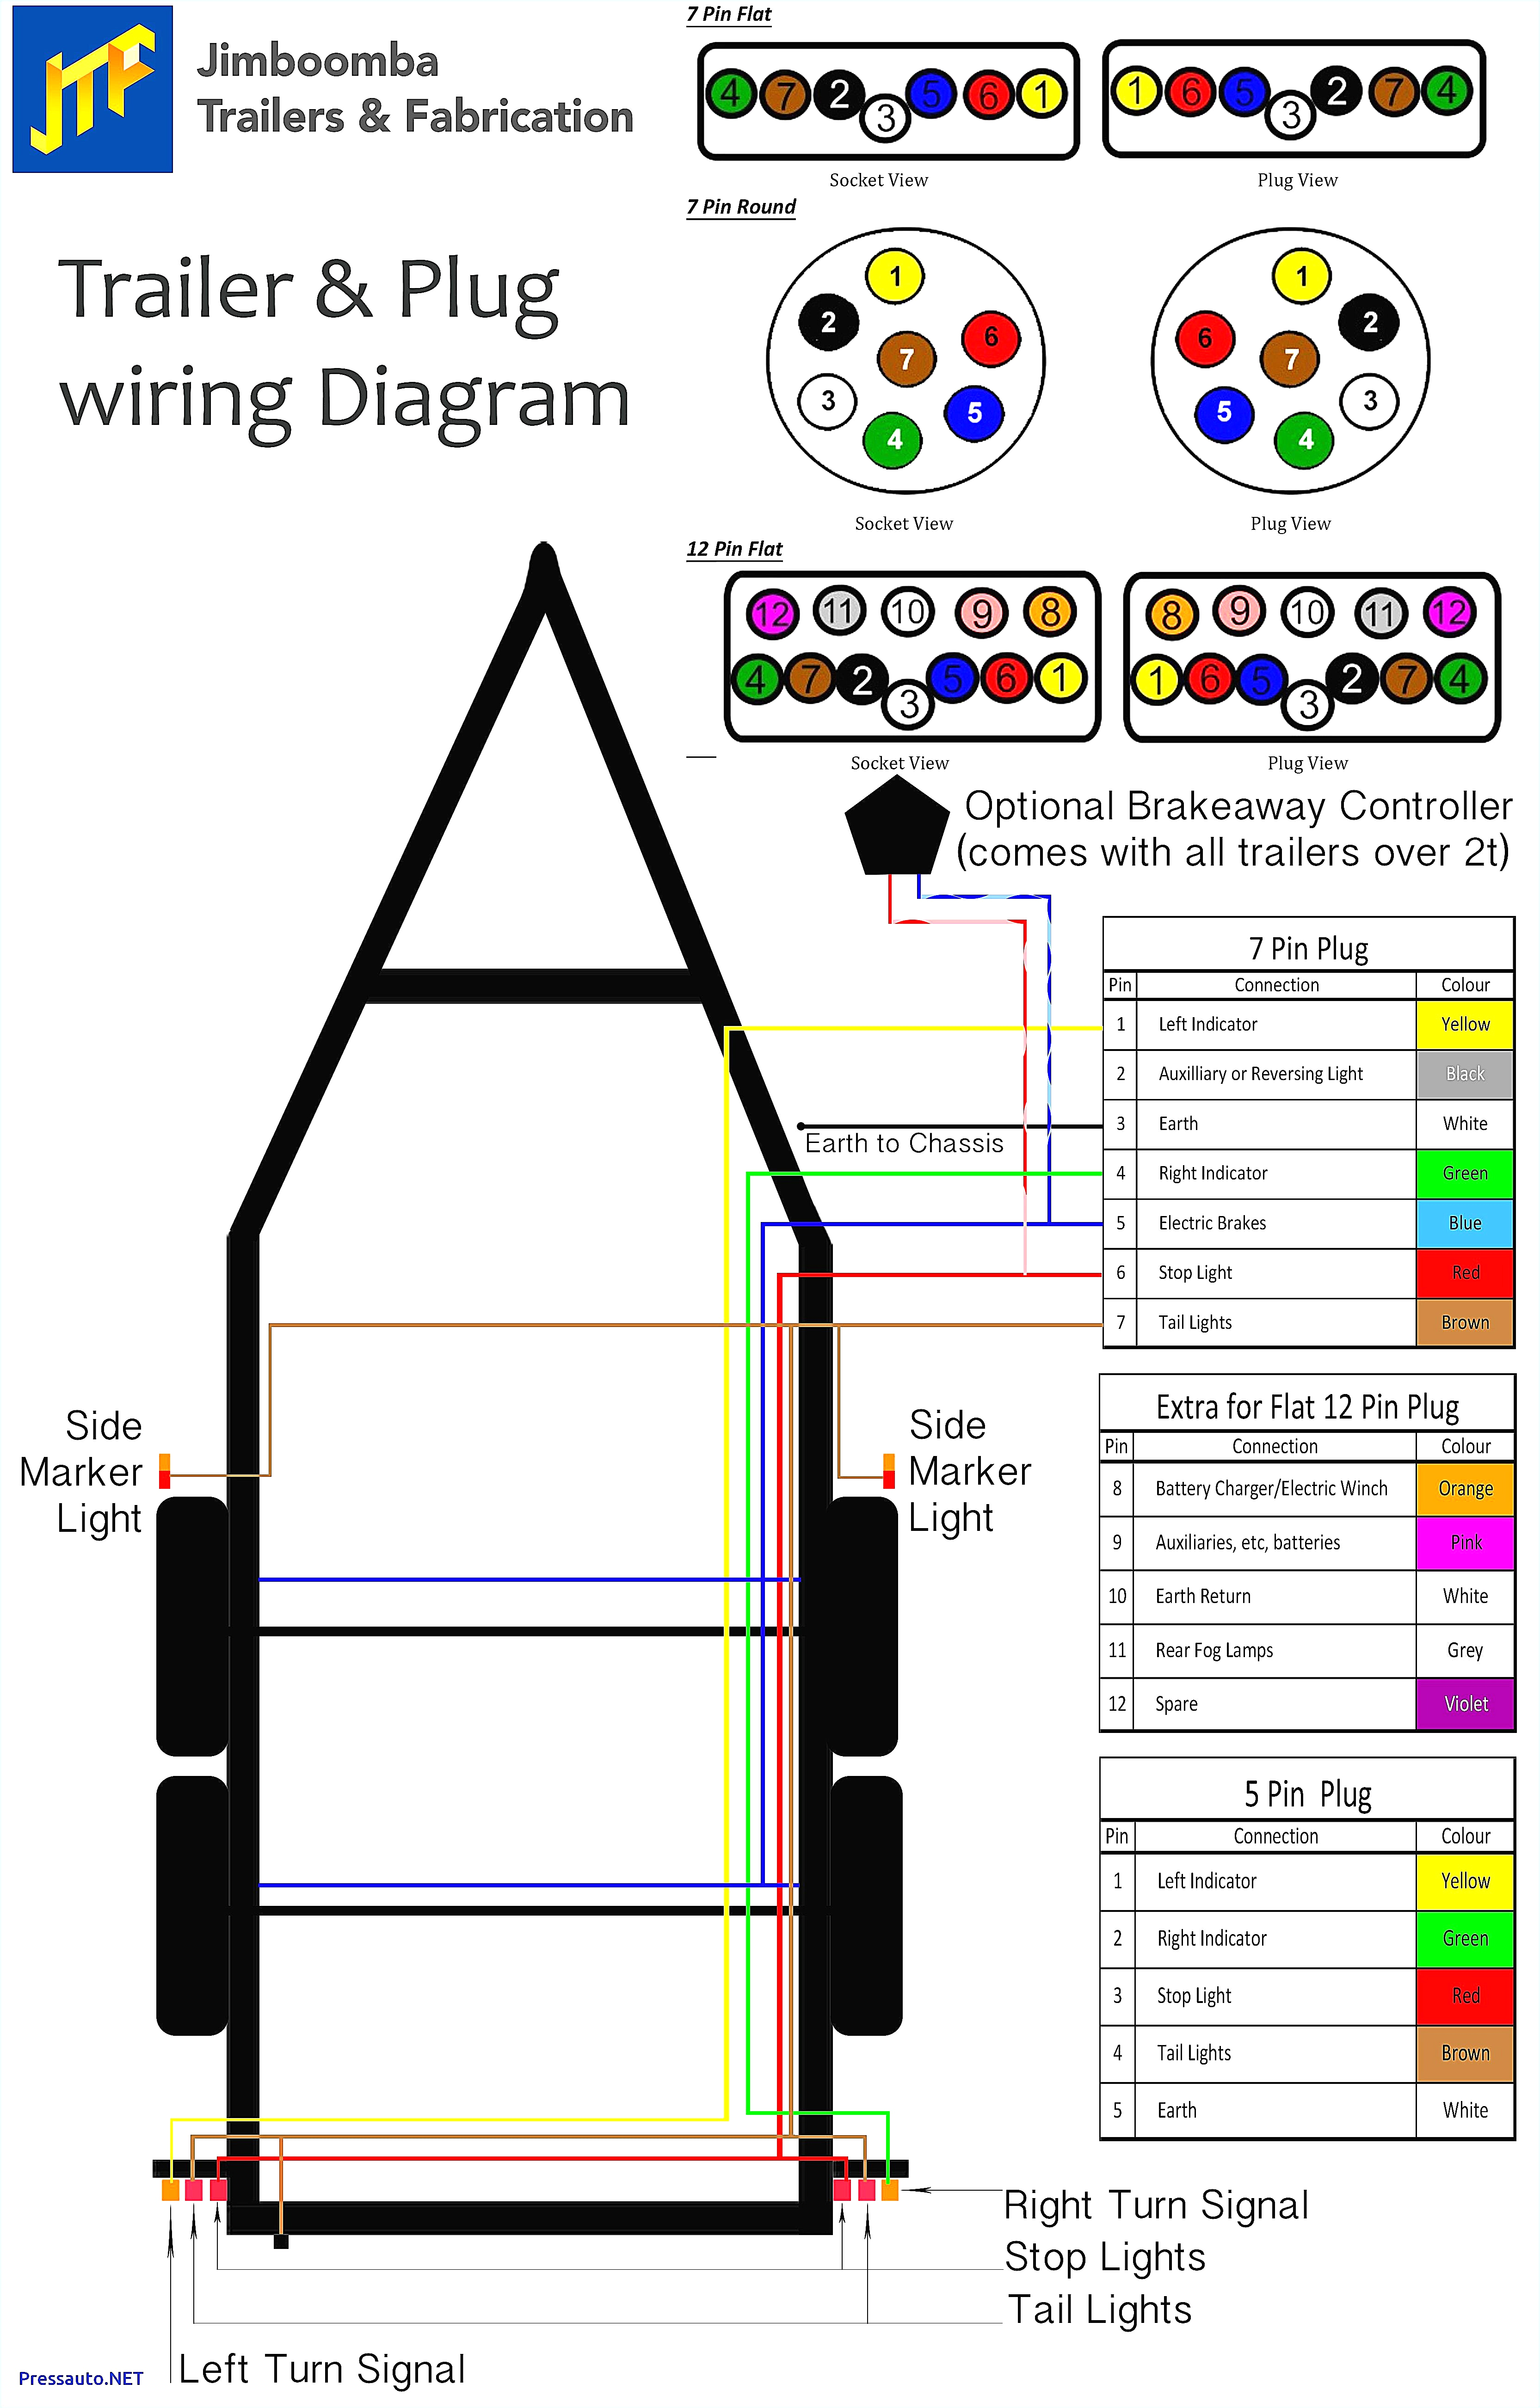 cargo mate utility trailer wiring diagram wiring diagram mega cargo mate utility trailer wiring diagram free picture